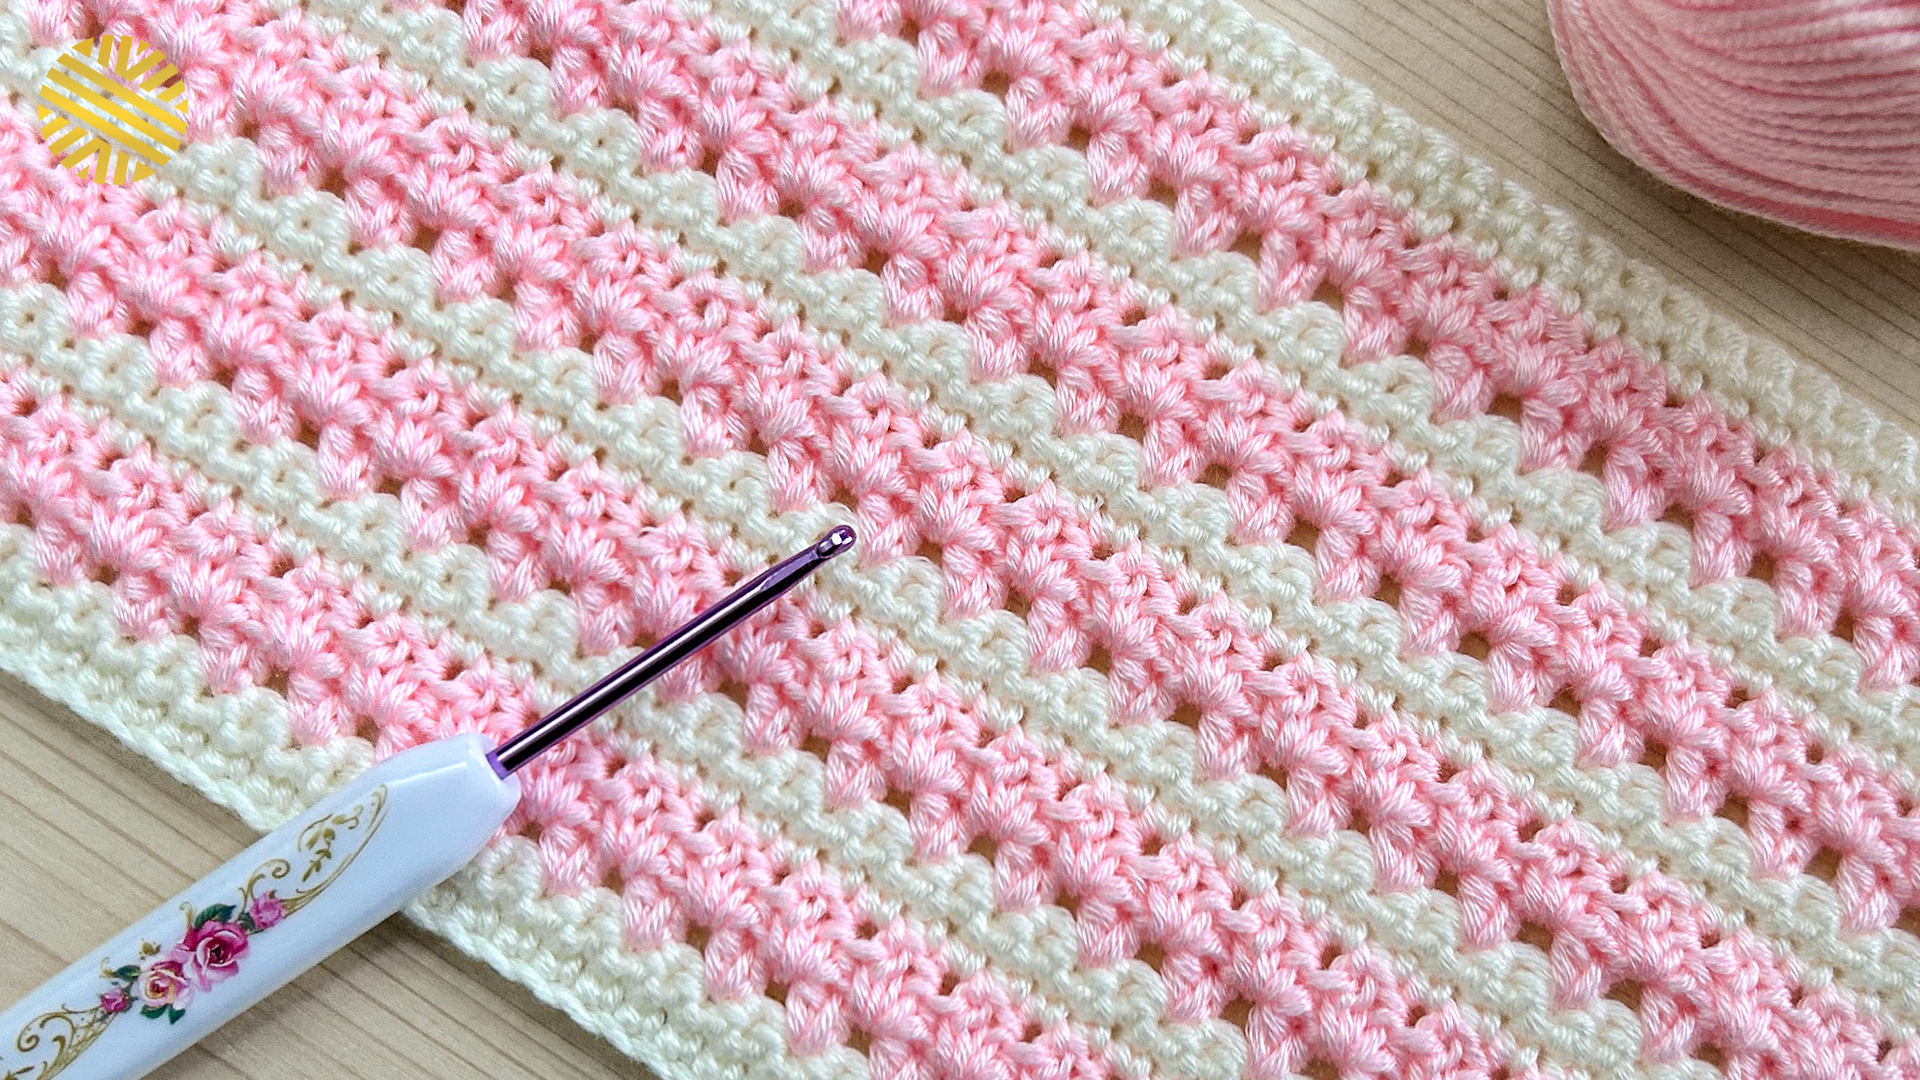 Bernat Blanket Yarn - Details & Crochet Patterns